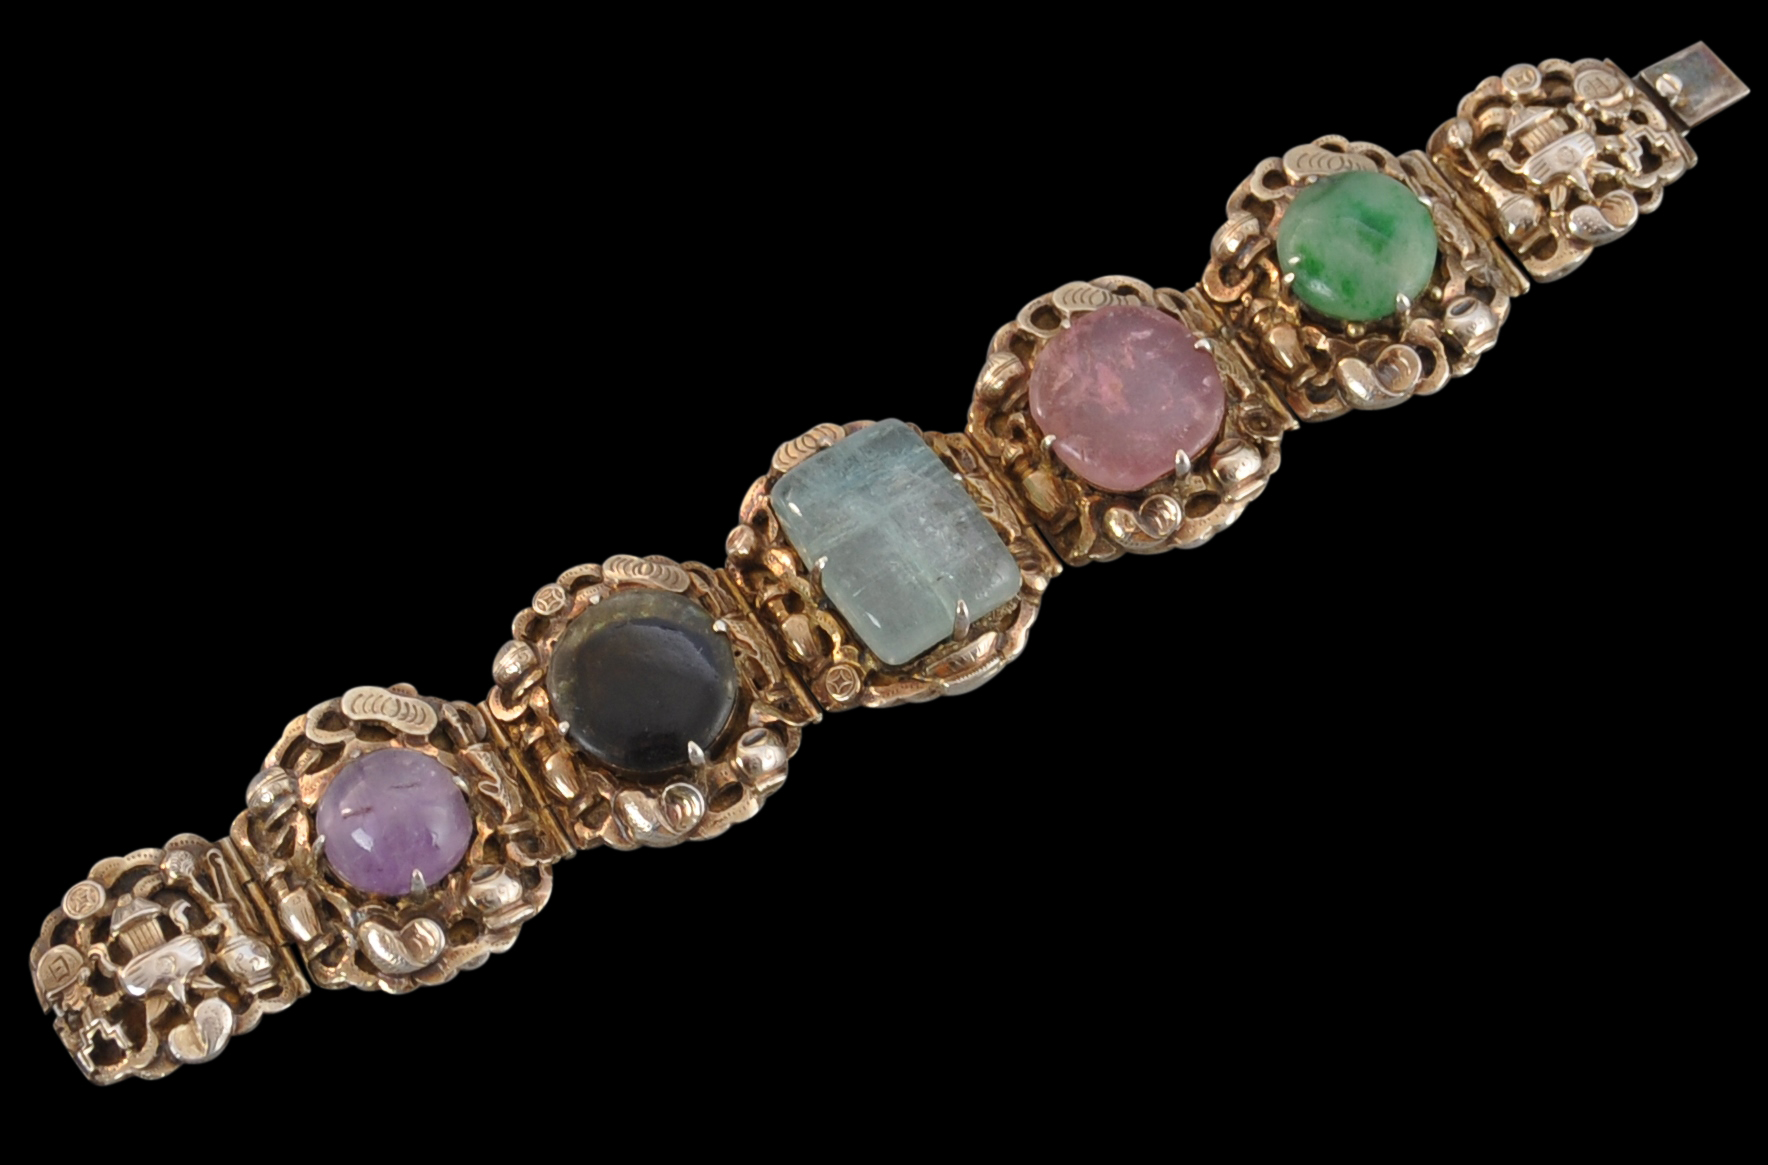 Bracelet in silver-gilt or 18 carats gold Constantine - Alix D. Reynis